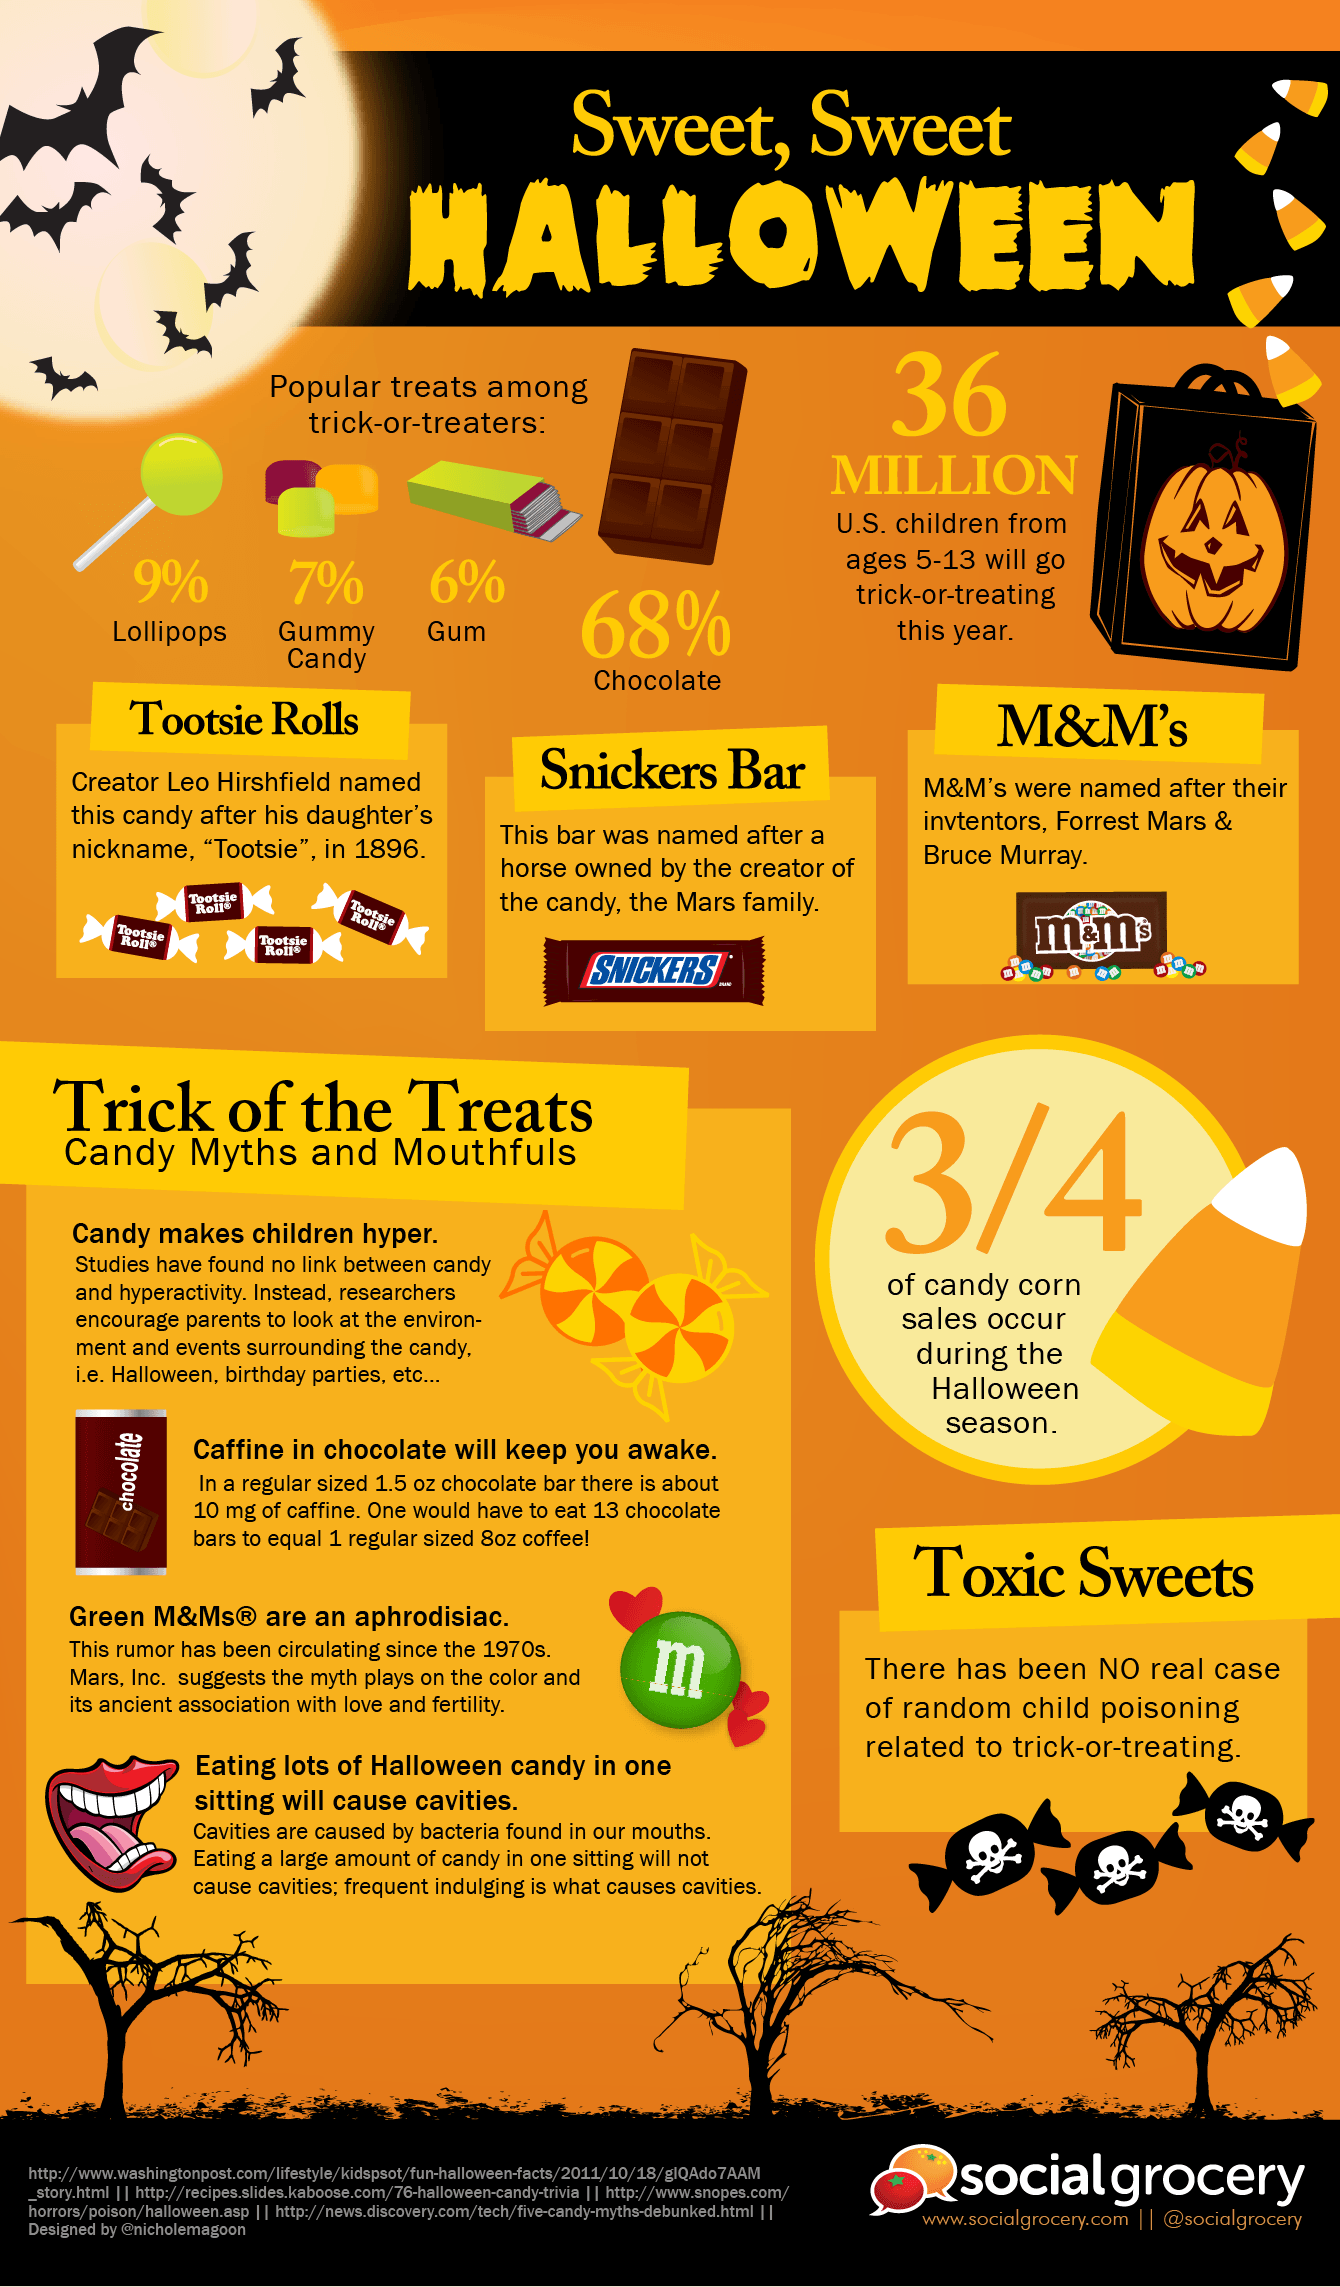 Sweet, Sweet Halloween Infographic